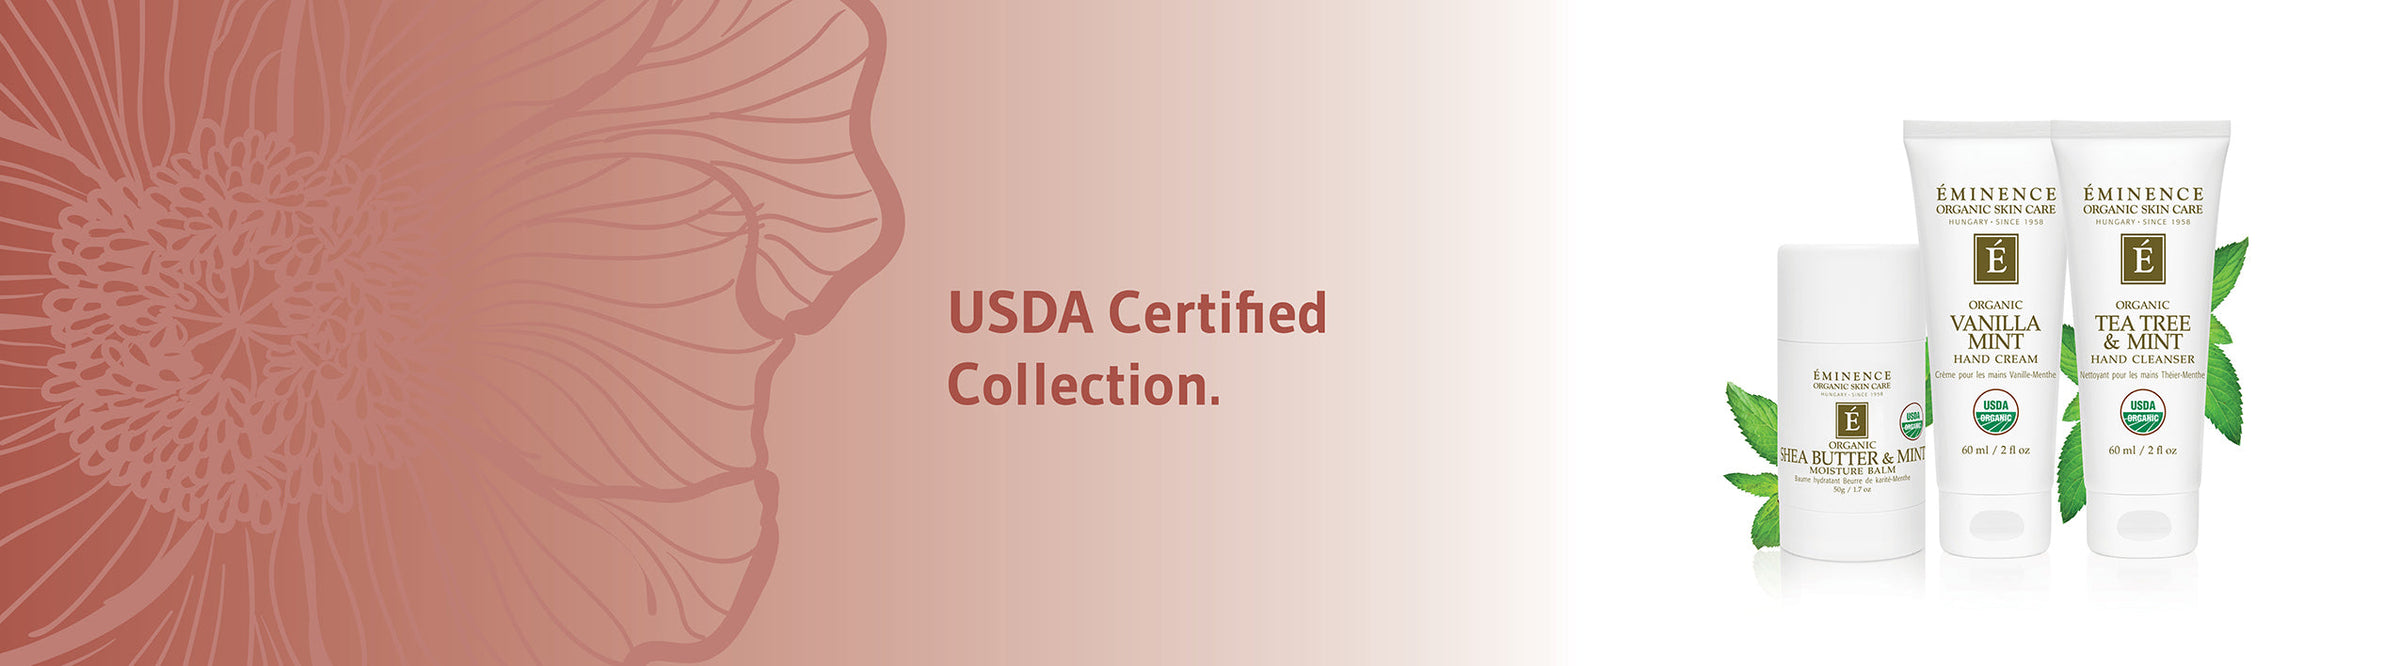 Eminence Organics USDA Certified Organic Collection